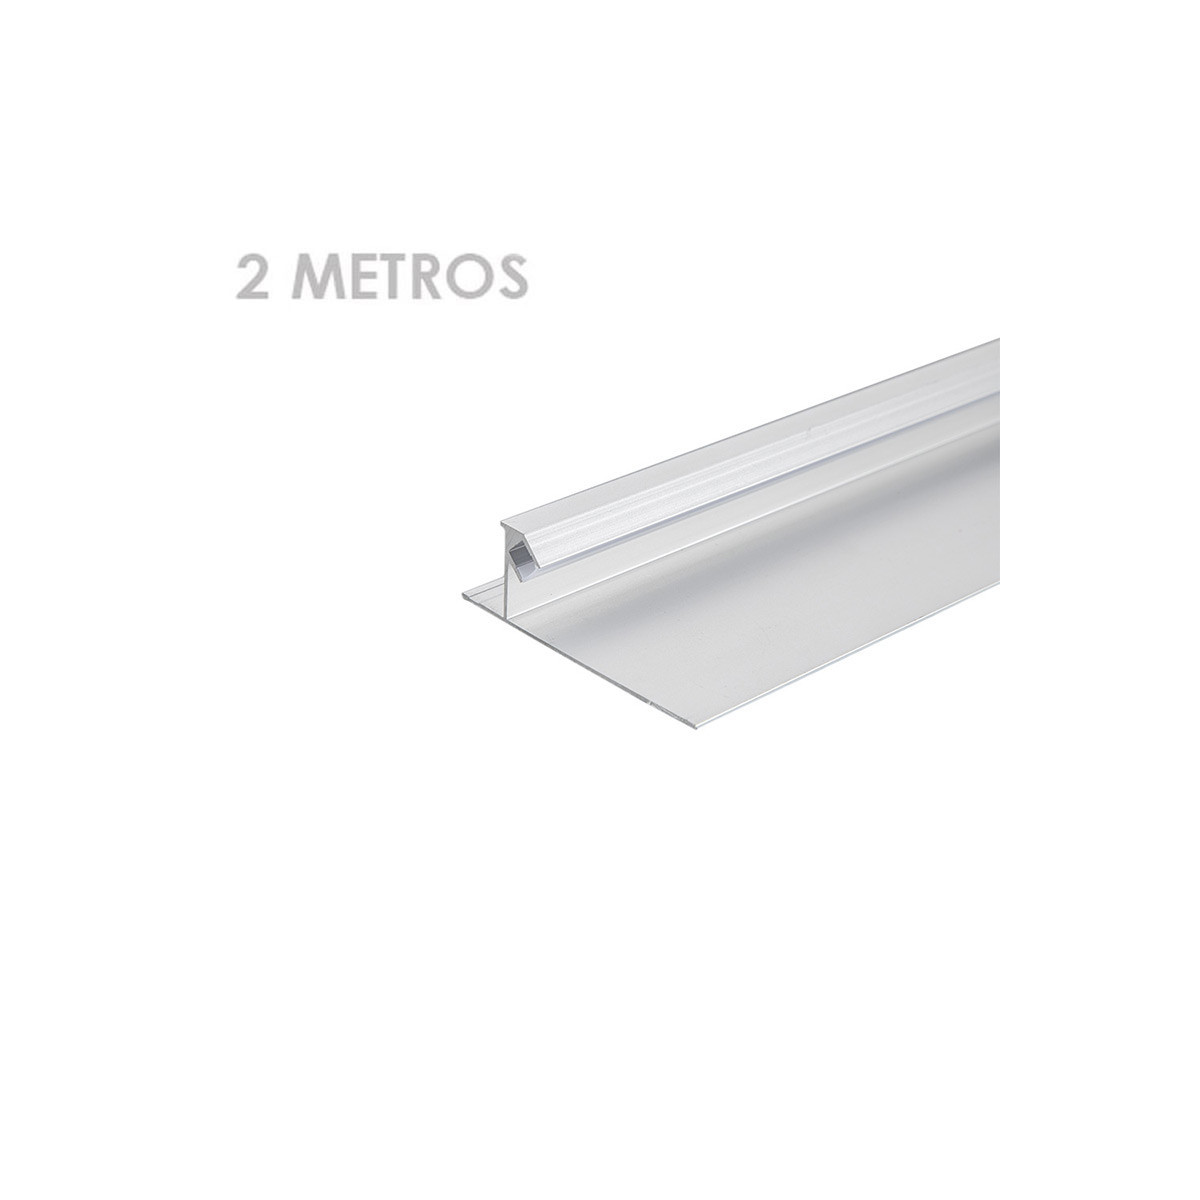 Perfil aluminio tira led 2m para zócalo - luz indirecta